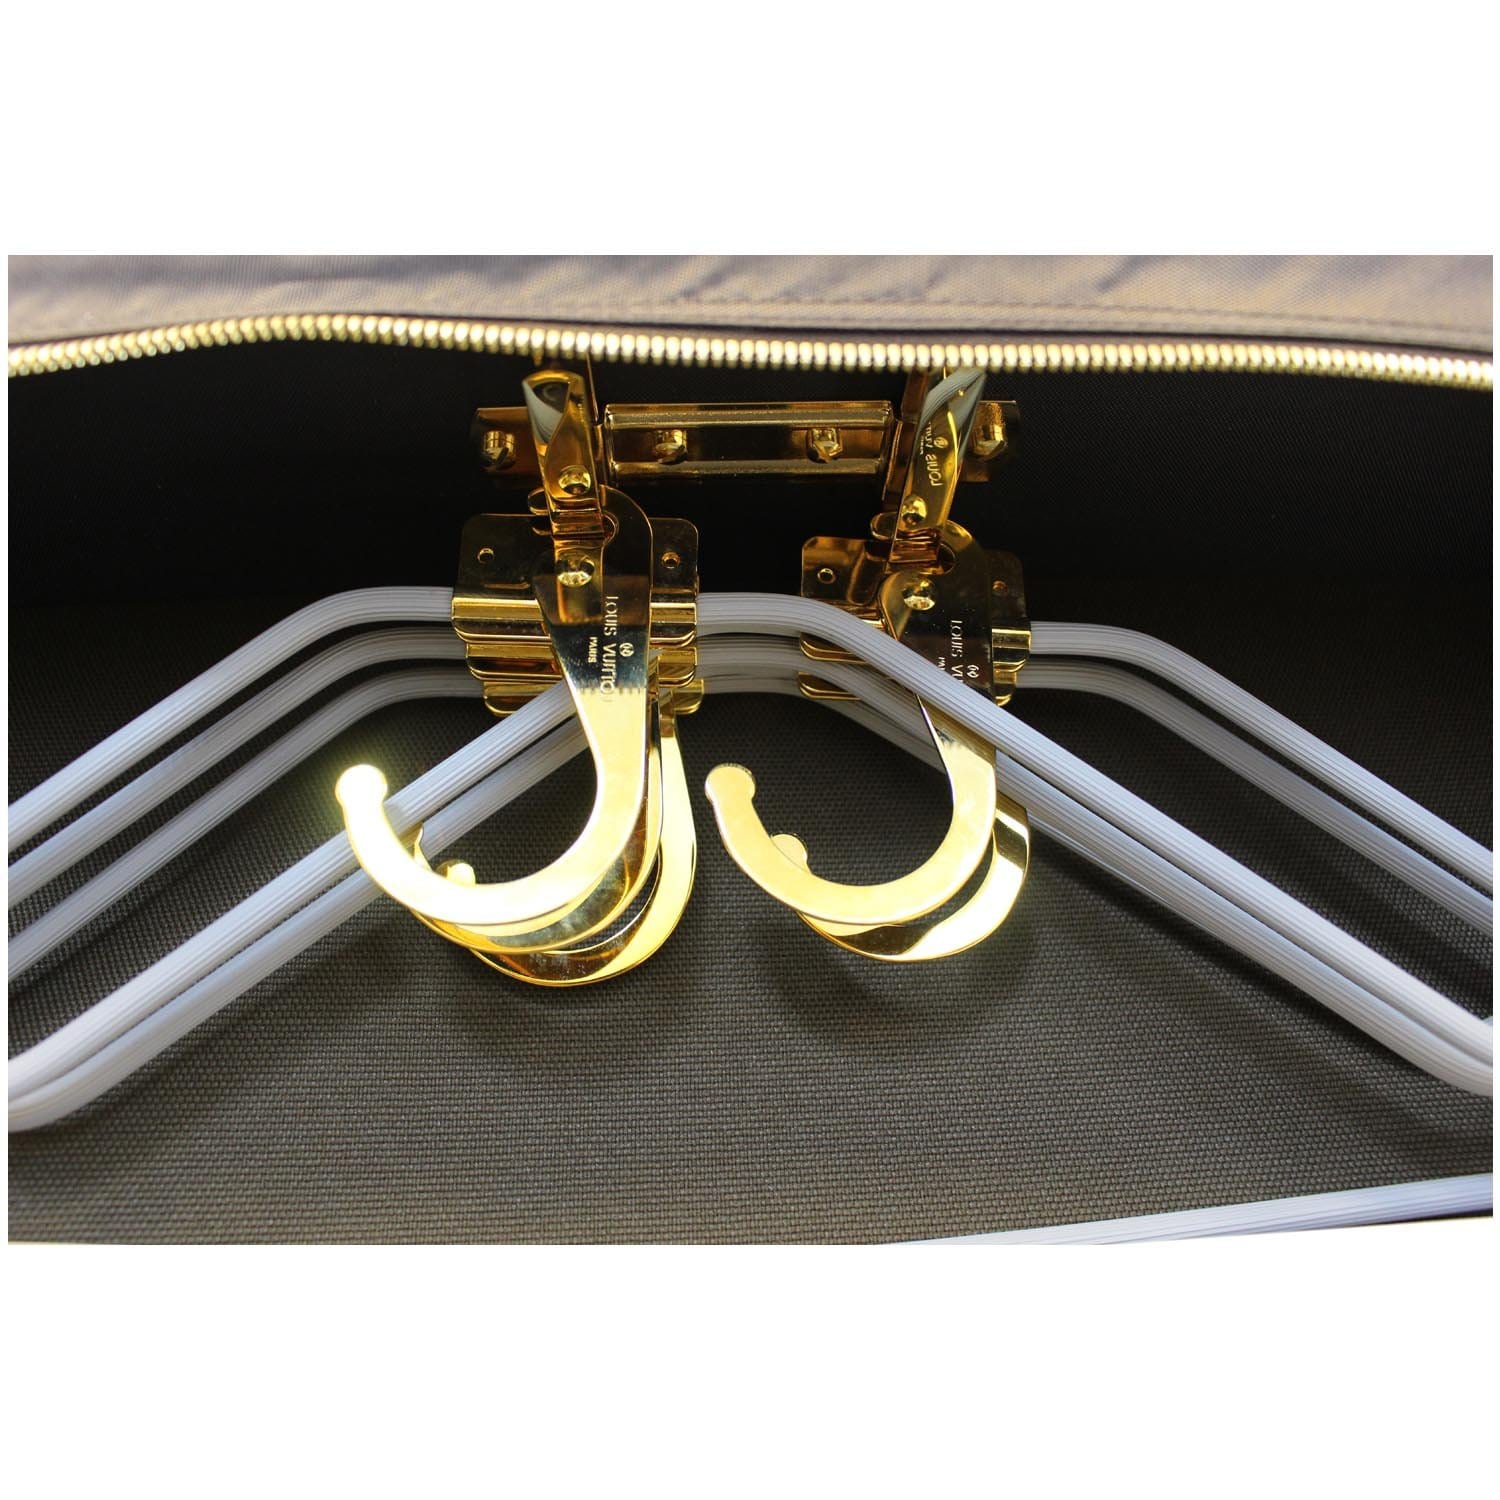 Bag Hanger' designed by Perrine Desmons for Louis Vuitton's Objets